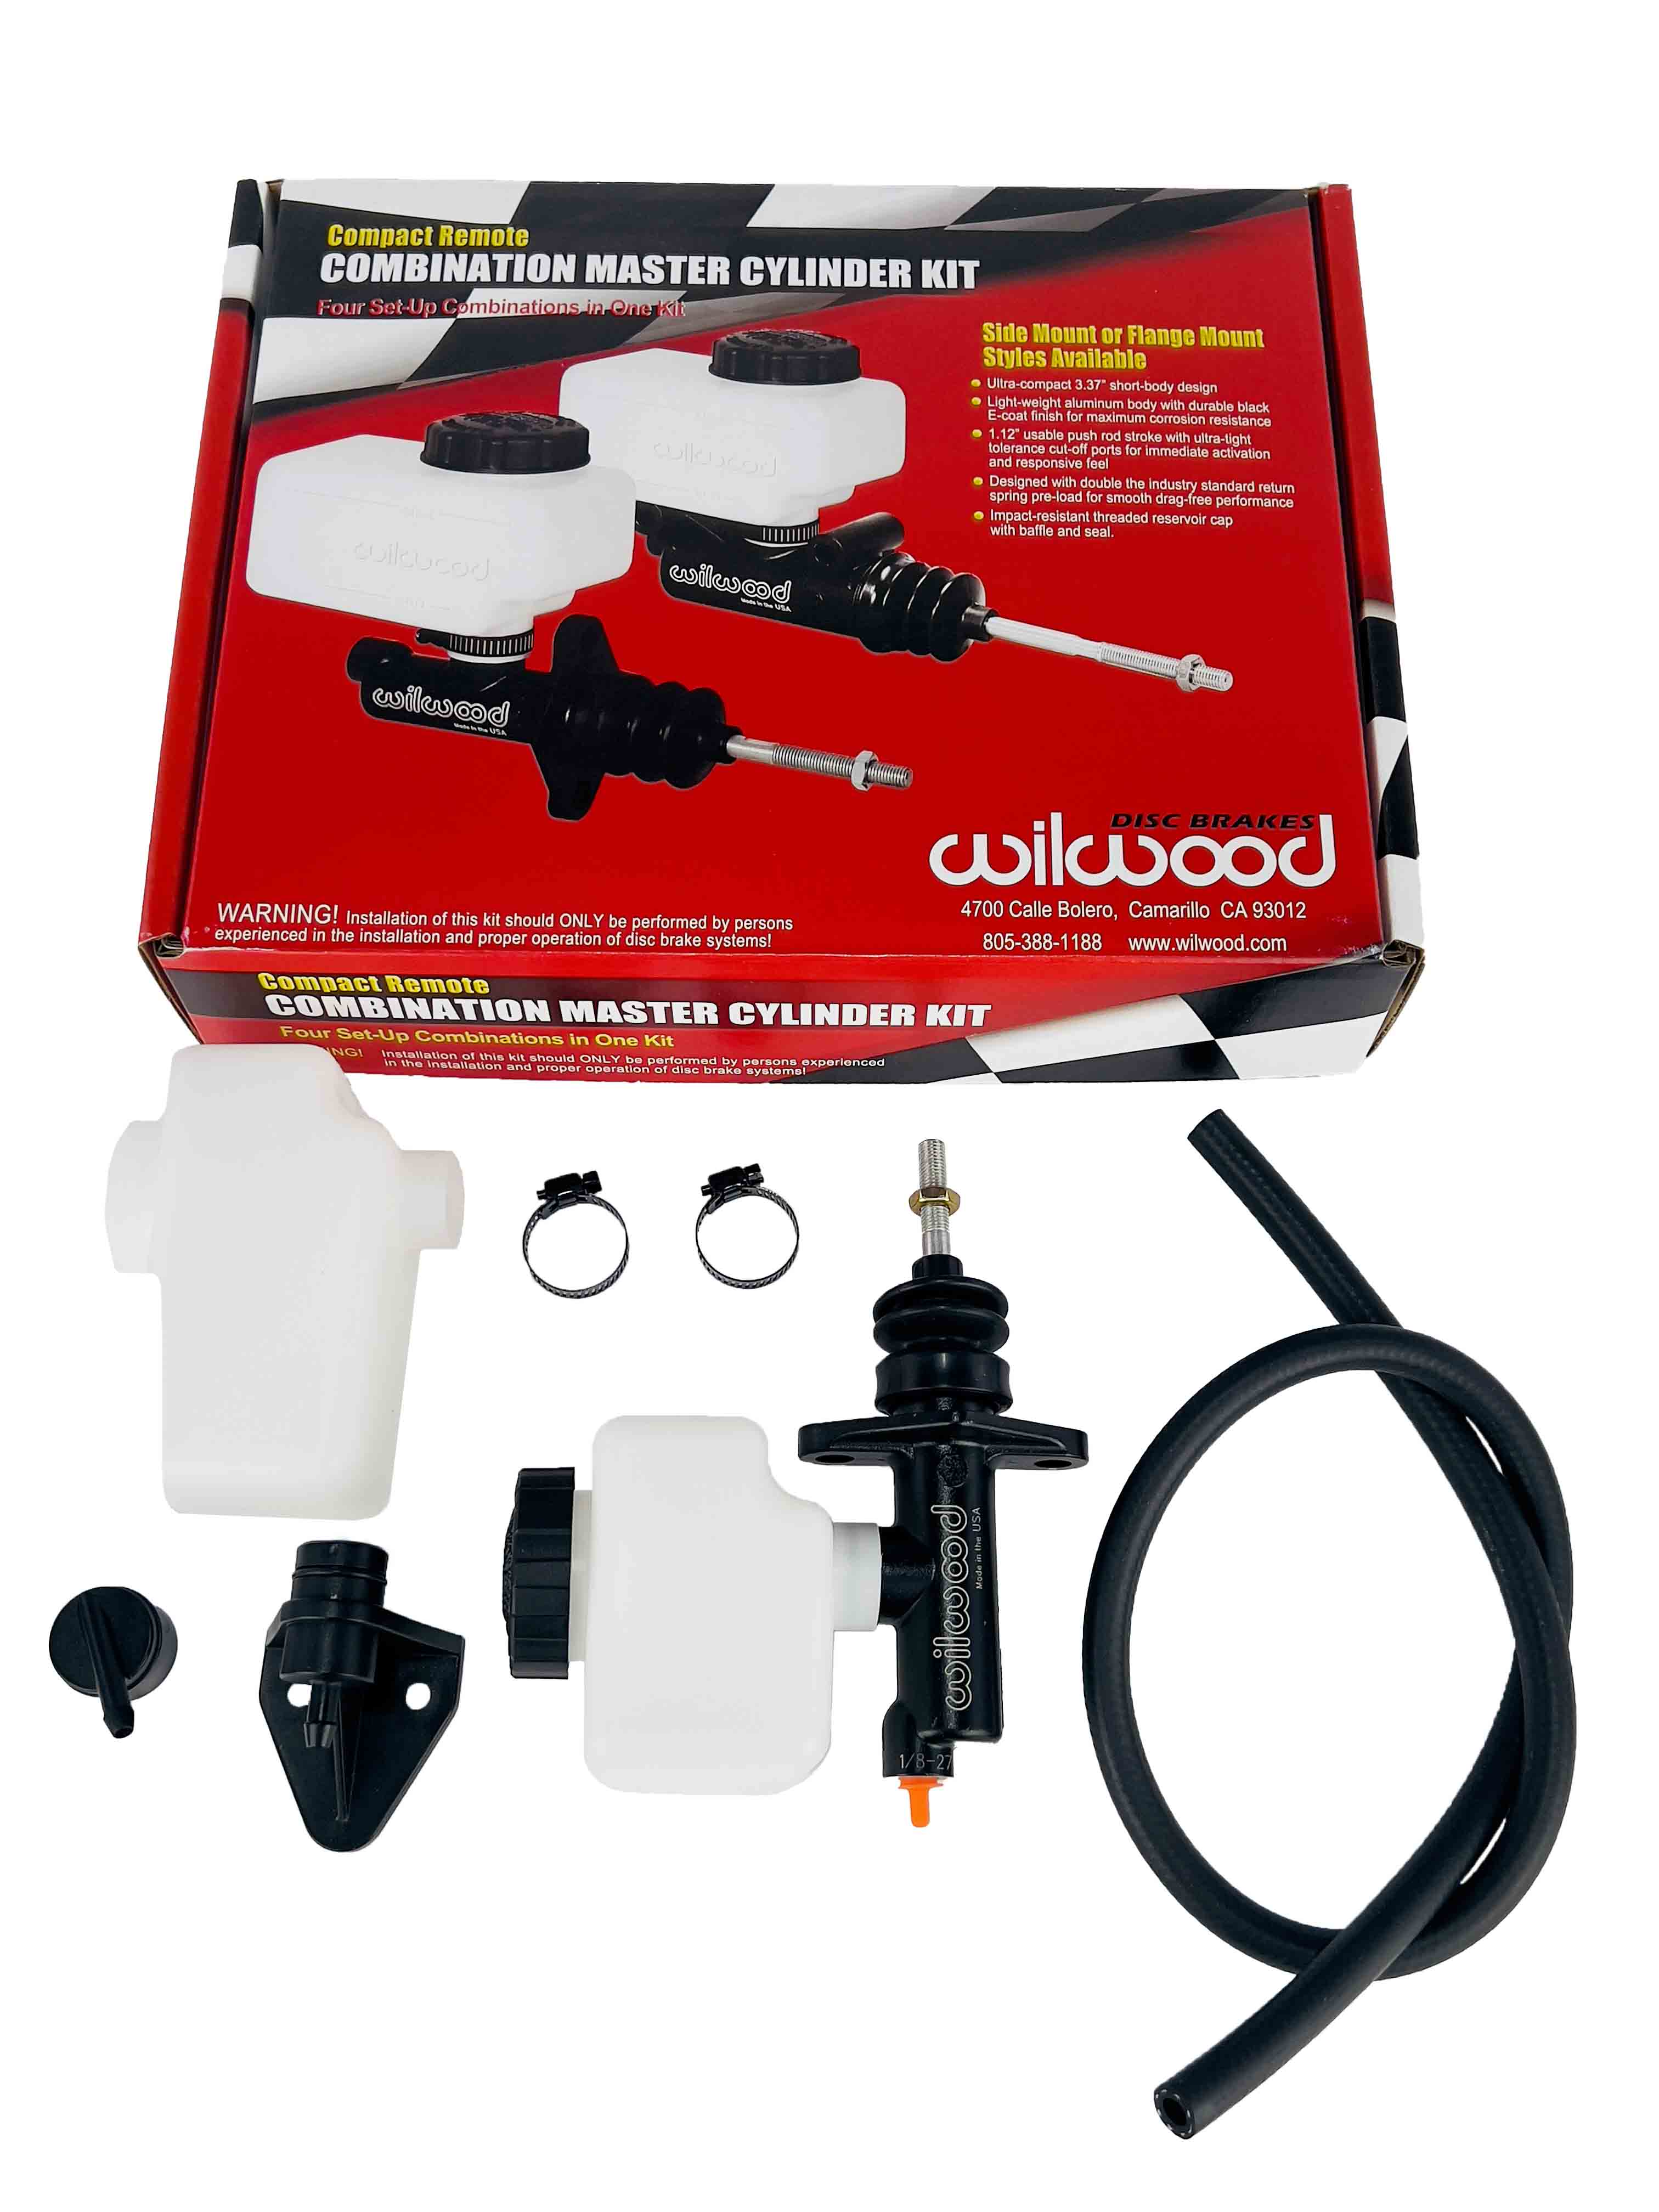 Wilwood clutch master cylinder kit